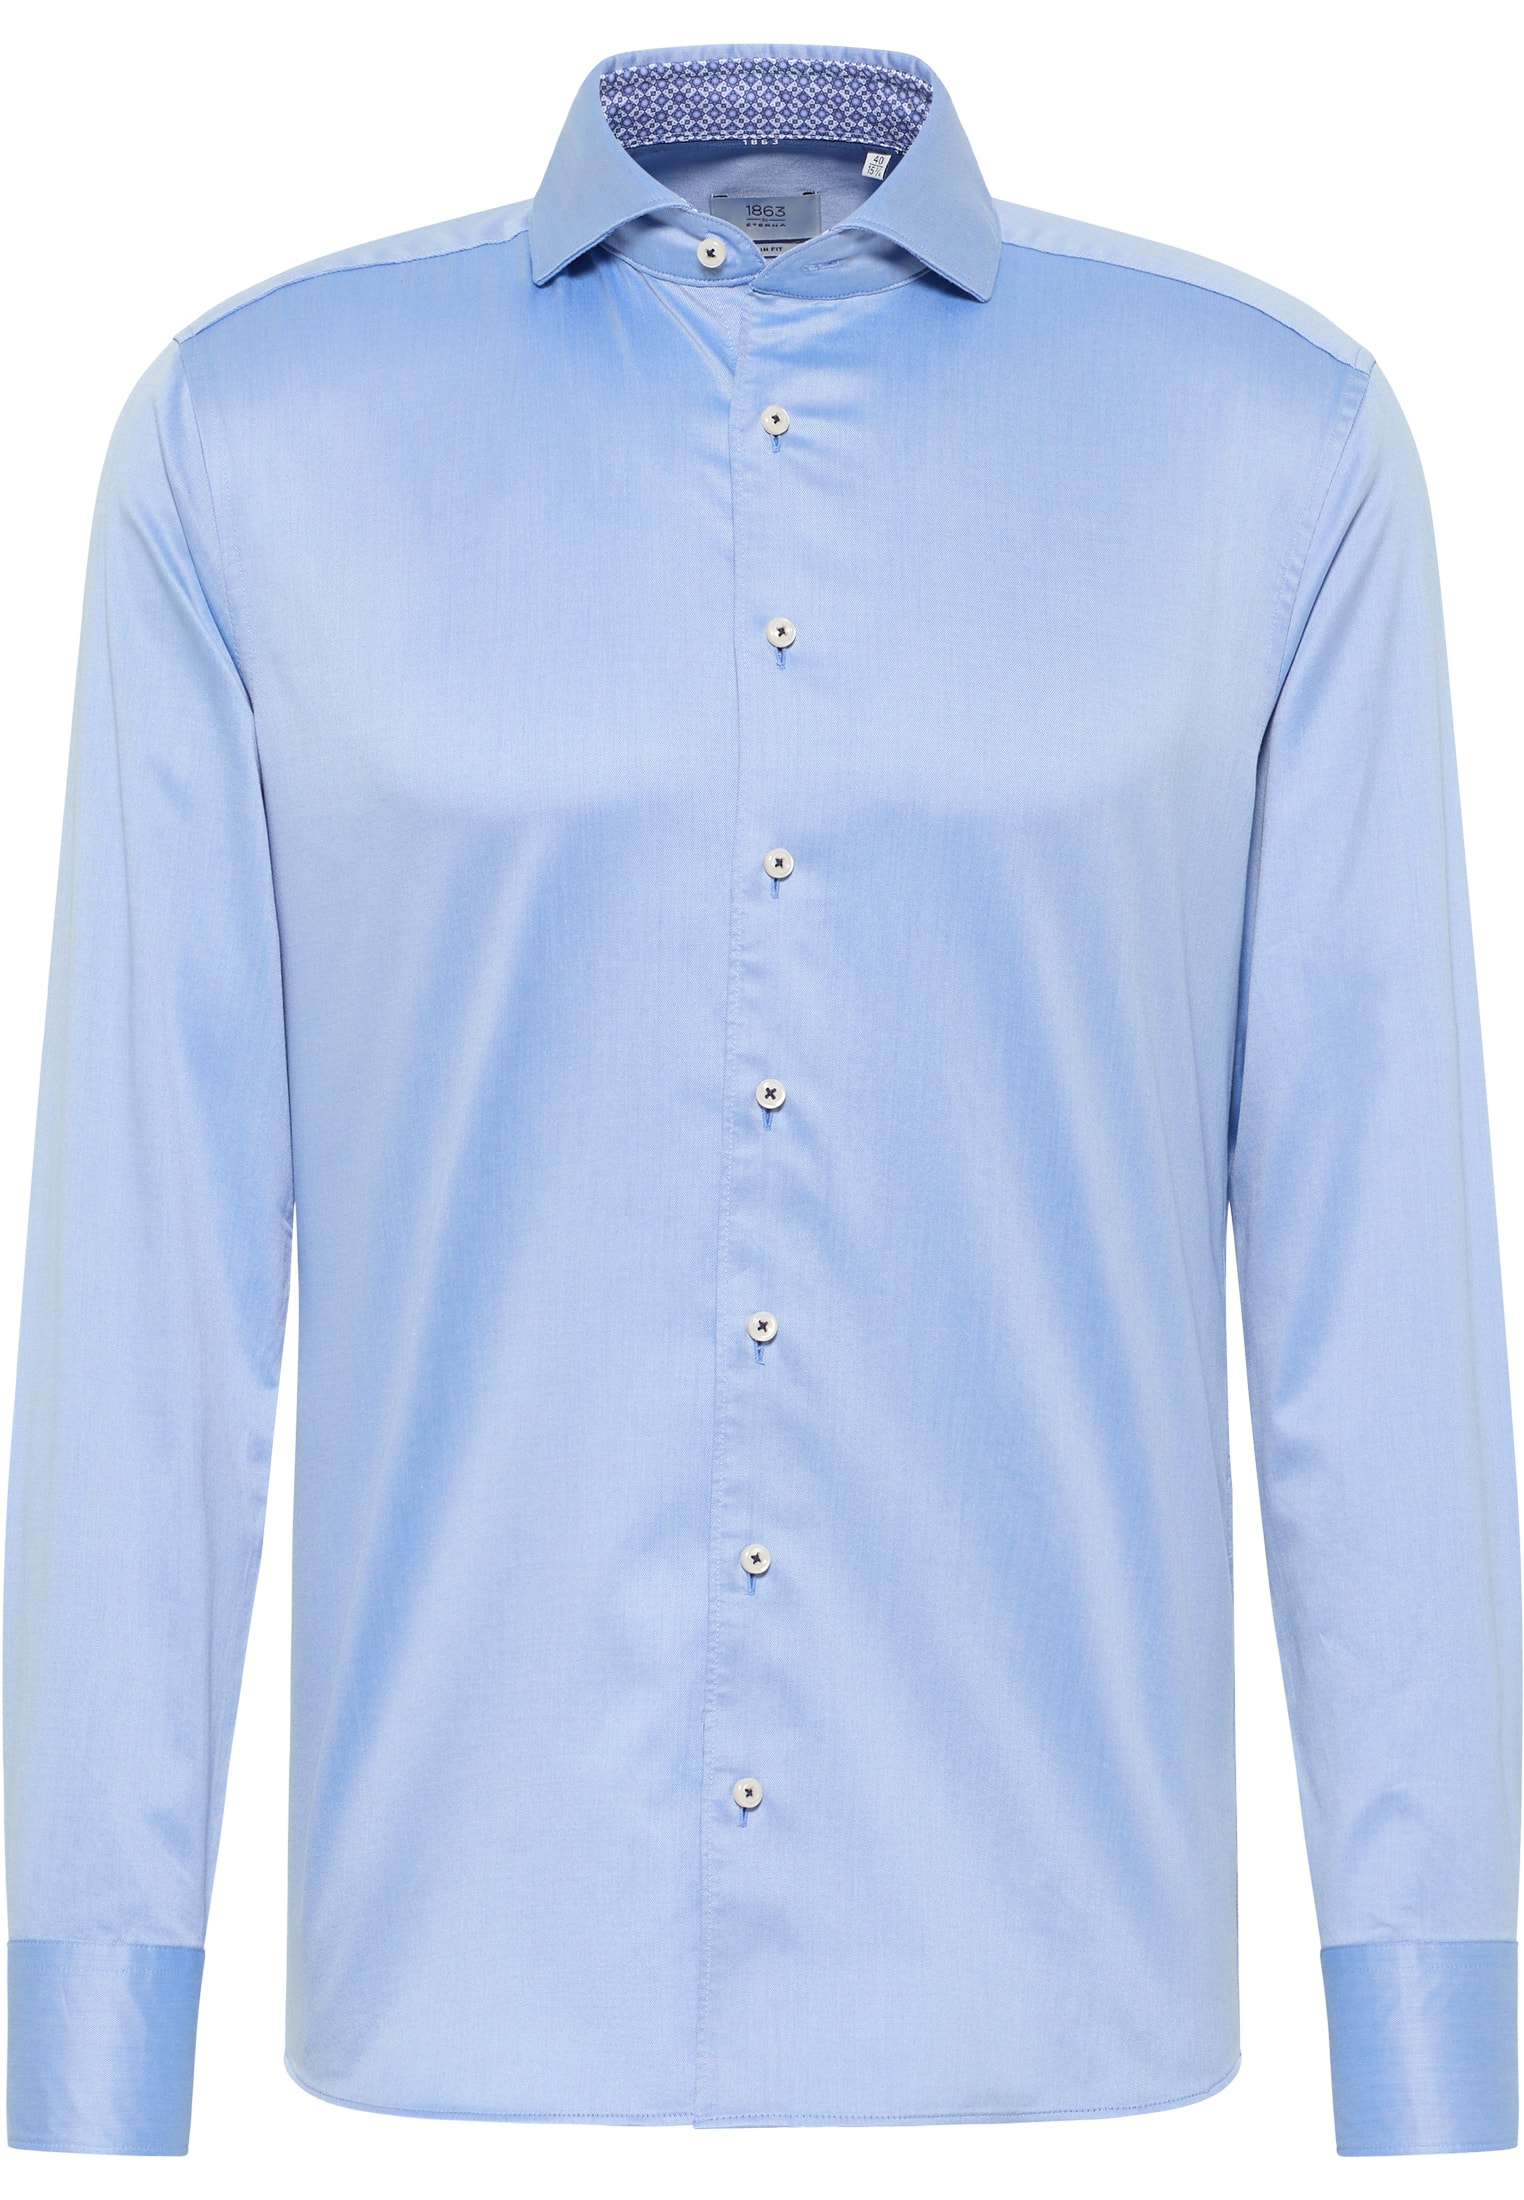 SLIM FIT Soft Luxury Shirt in medium blue plain